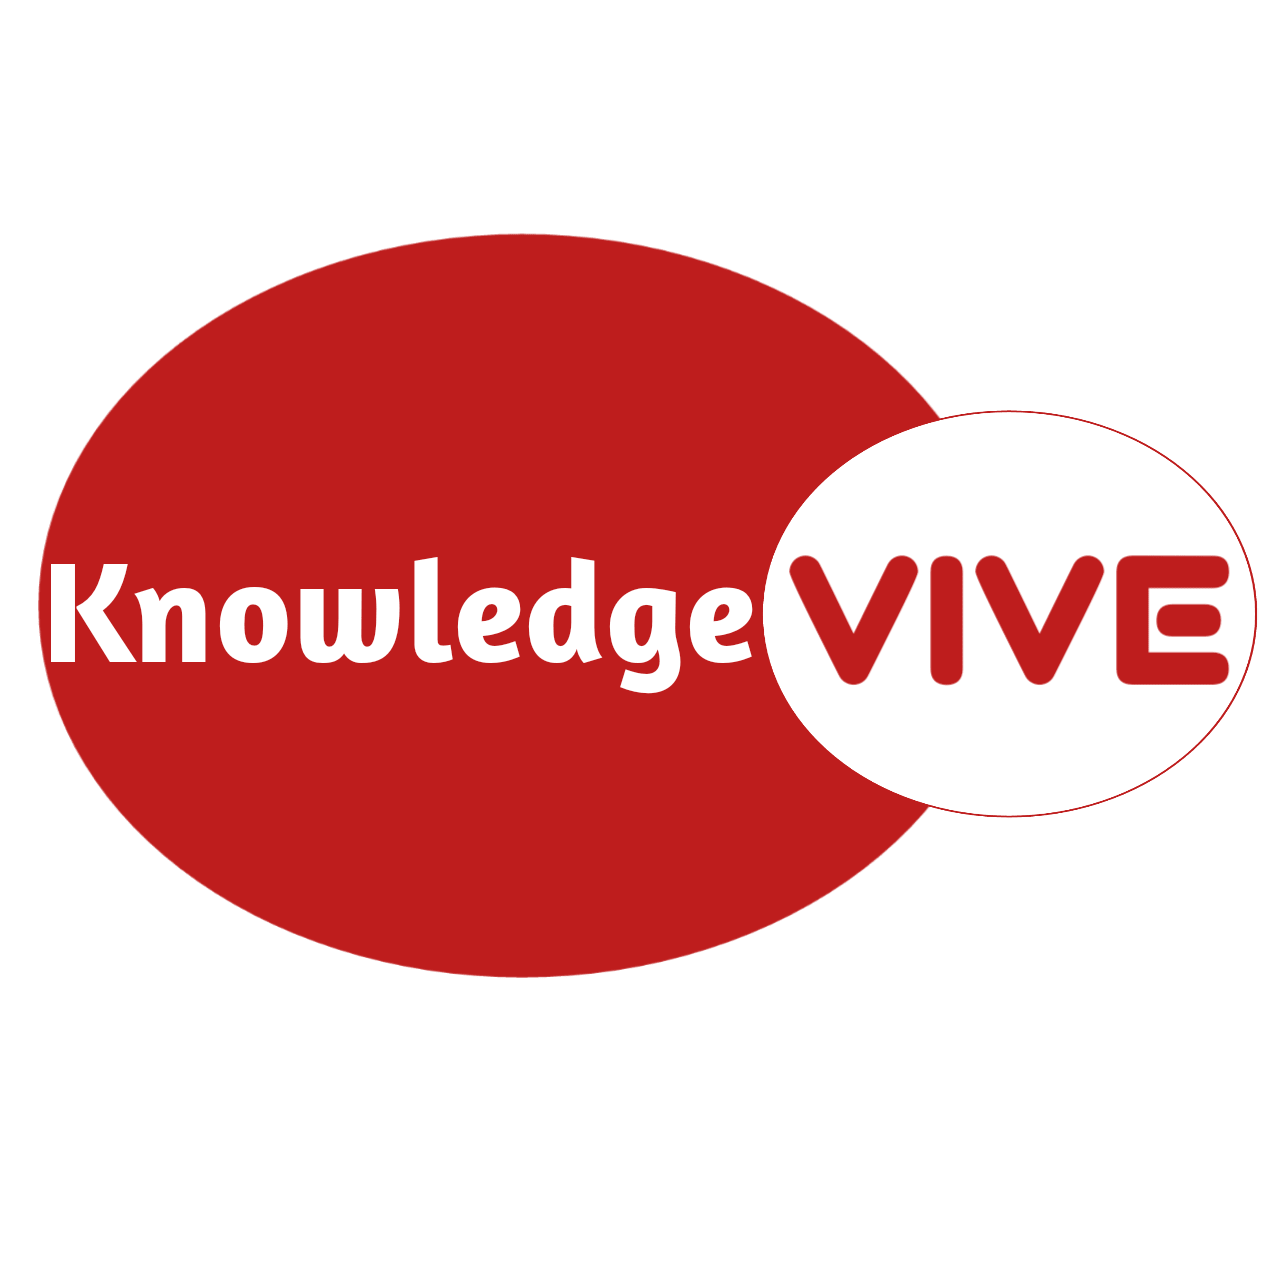 Knowledge-Vive